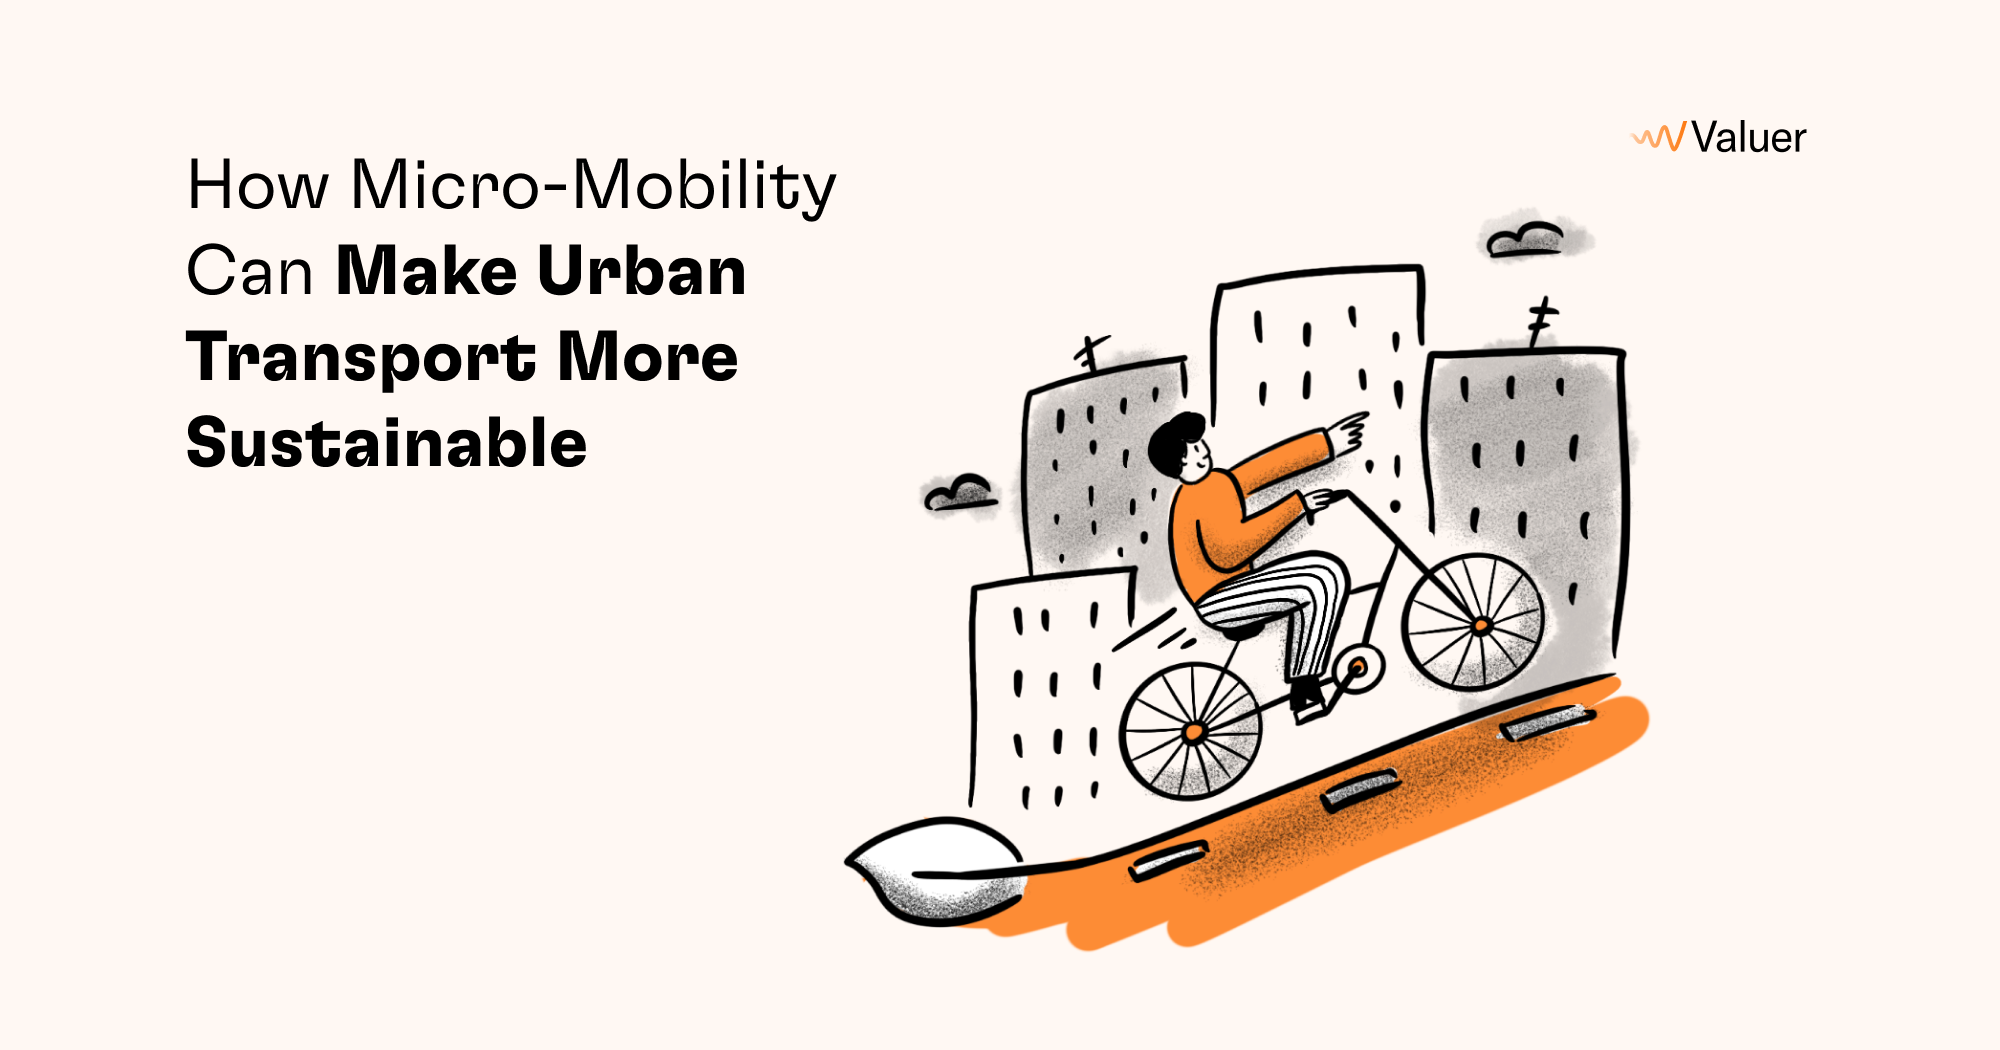 Micromobility: A Travel Mode Innovation